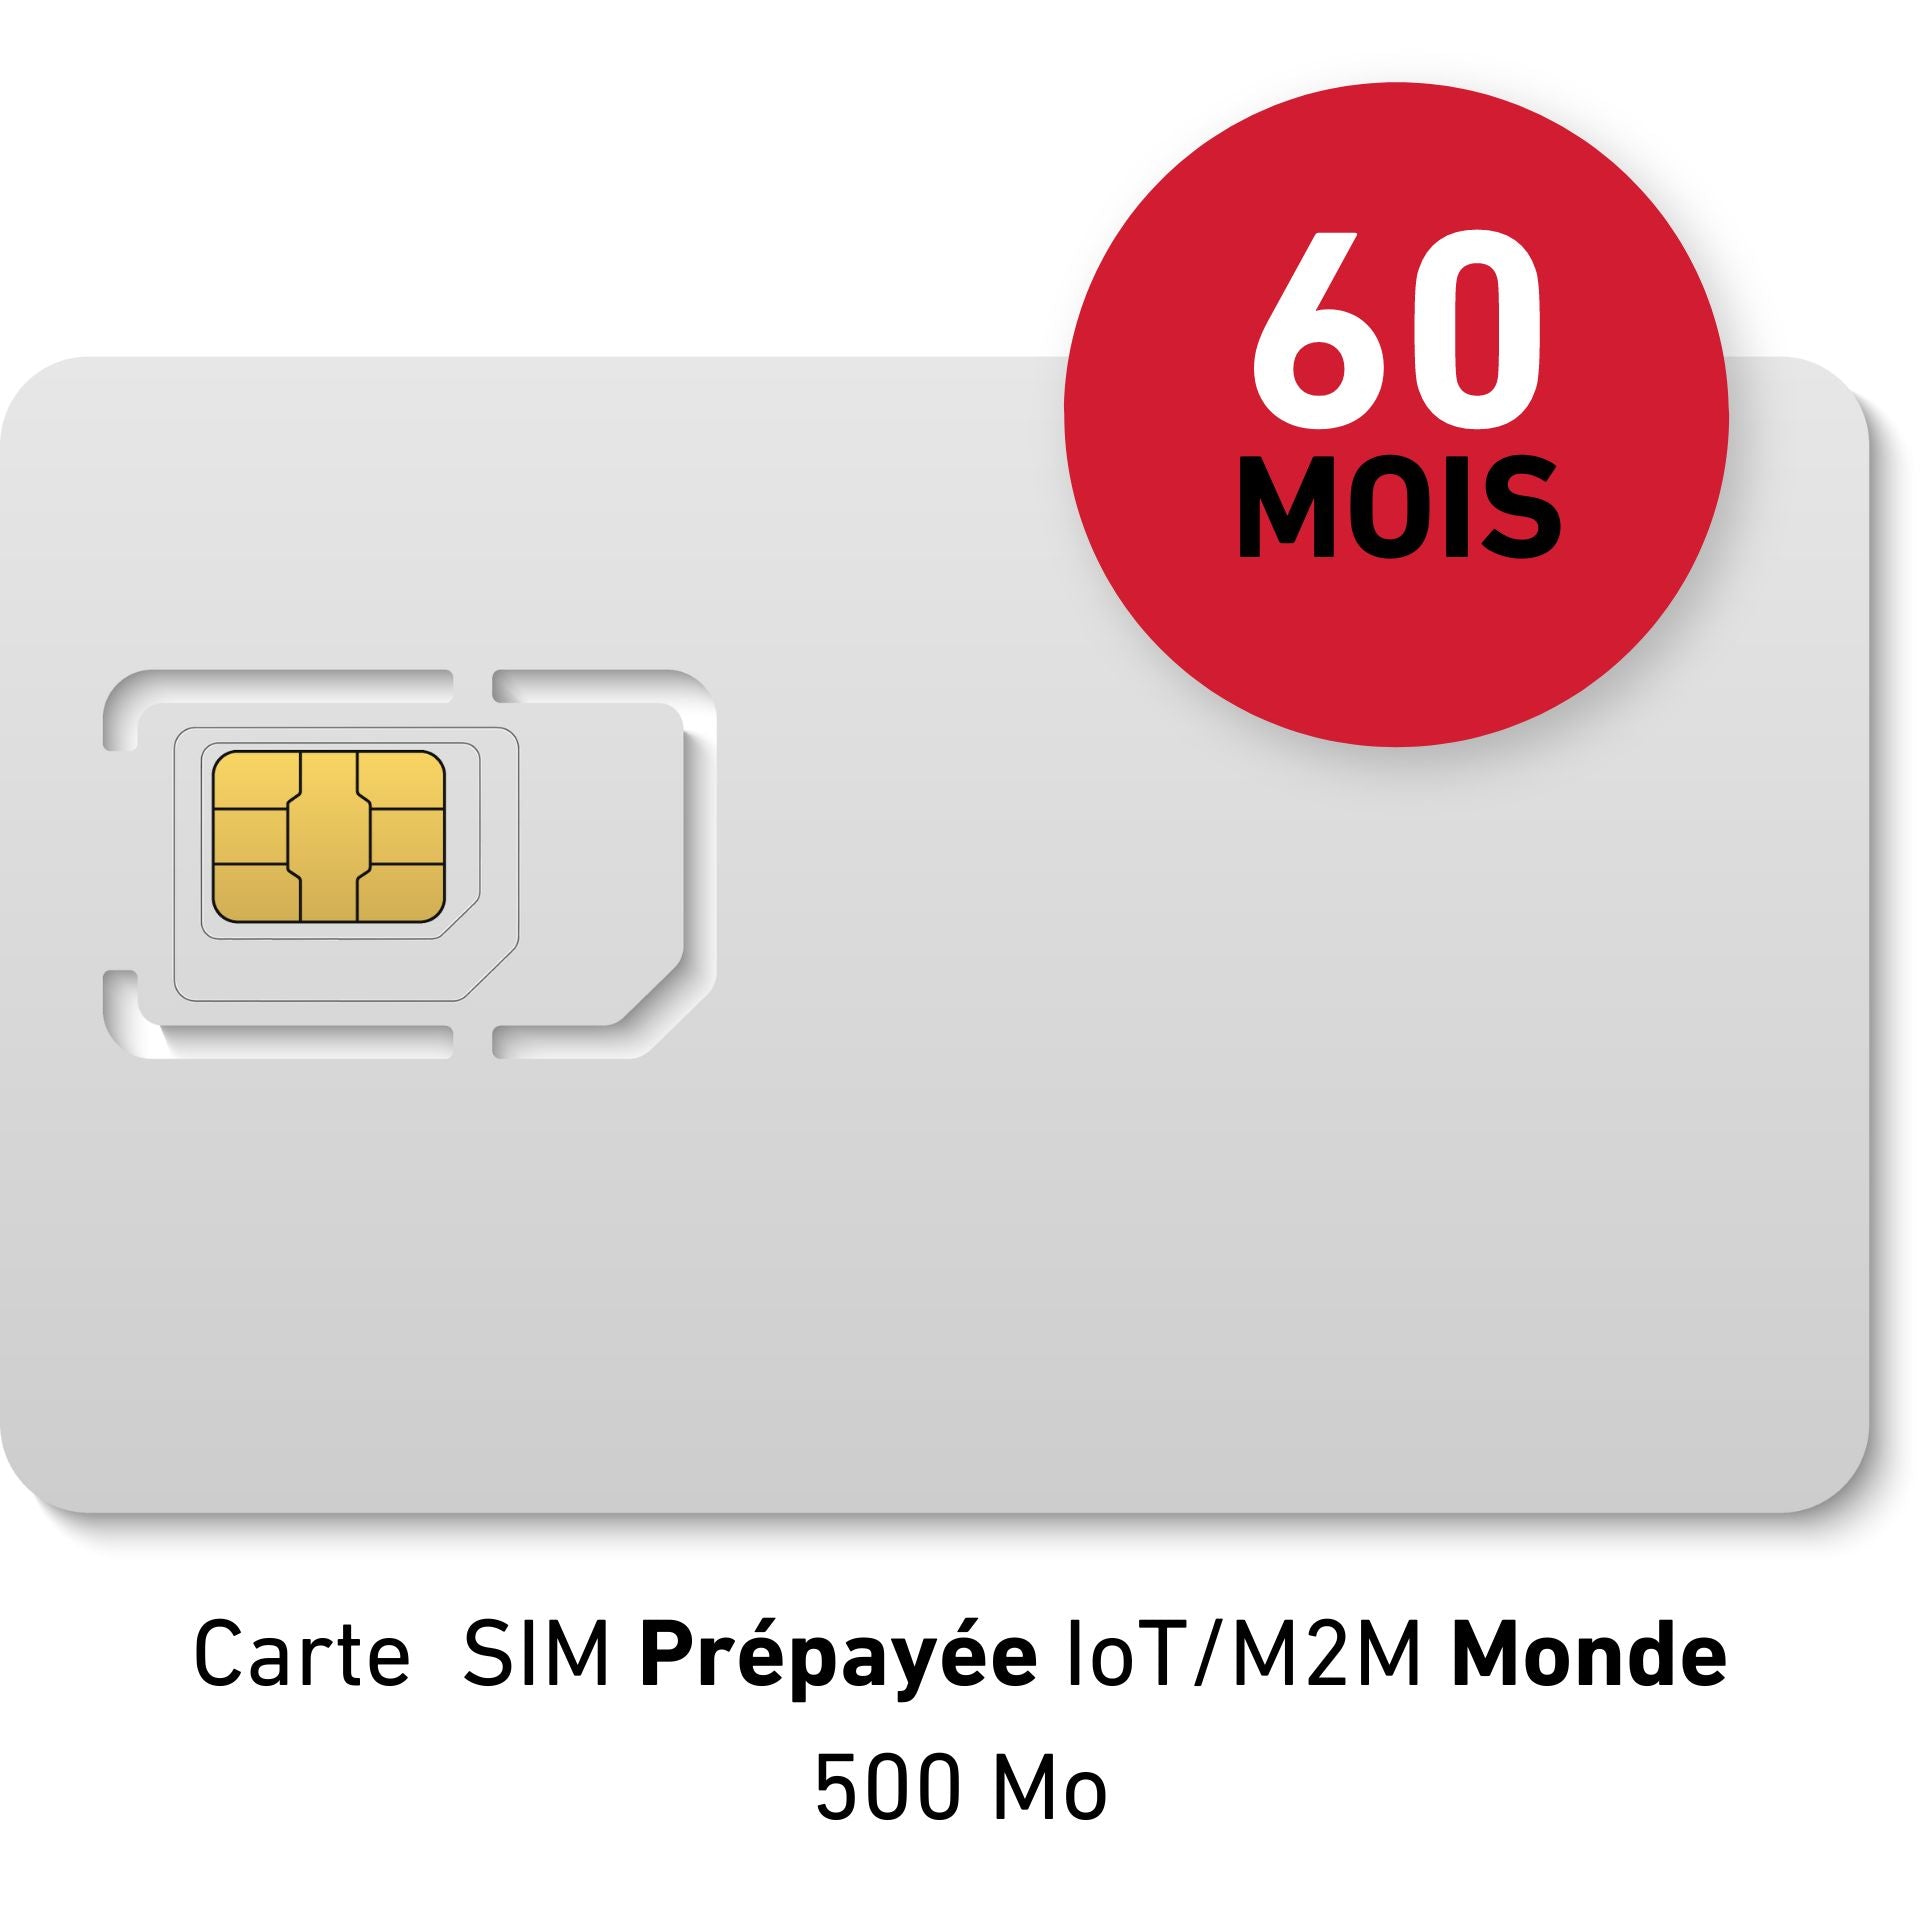 Tarjeta SIM de prepago IoT/M2M World - 50 euros HT - 500Mb de datos - Validez 60 MESES